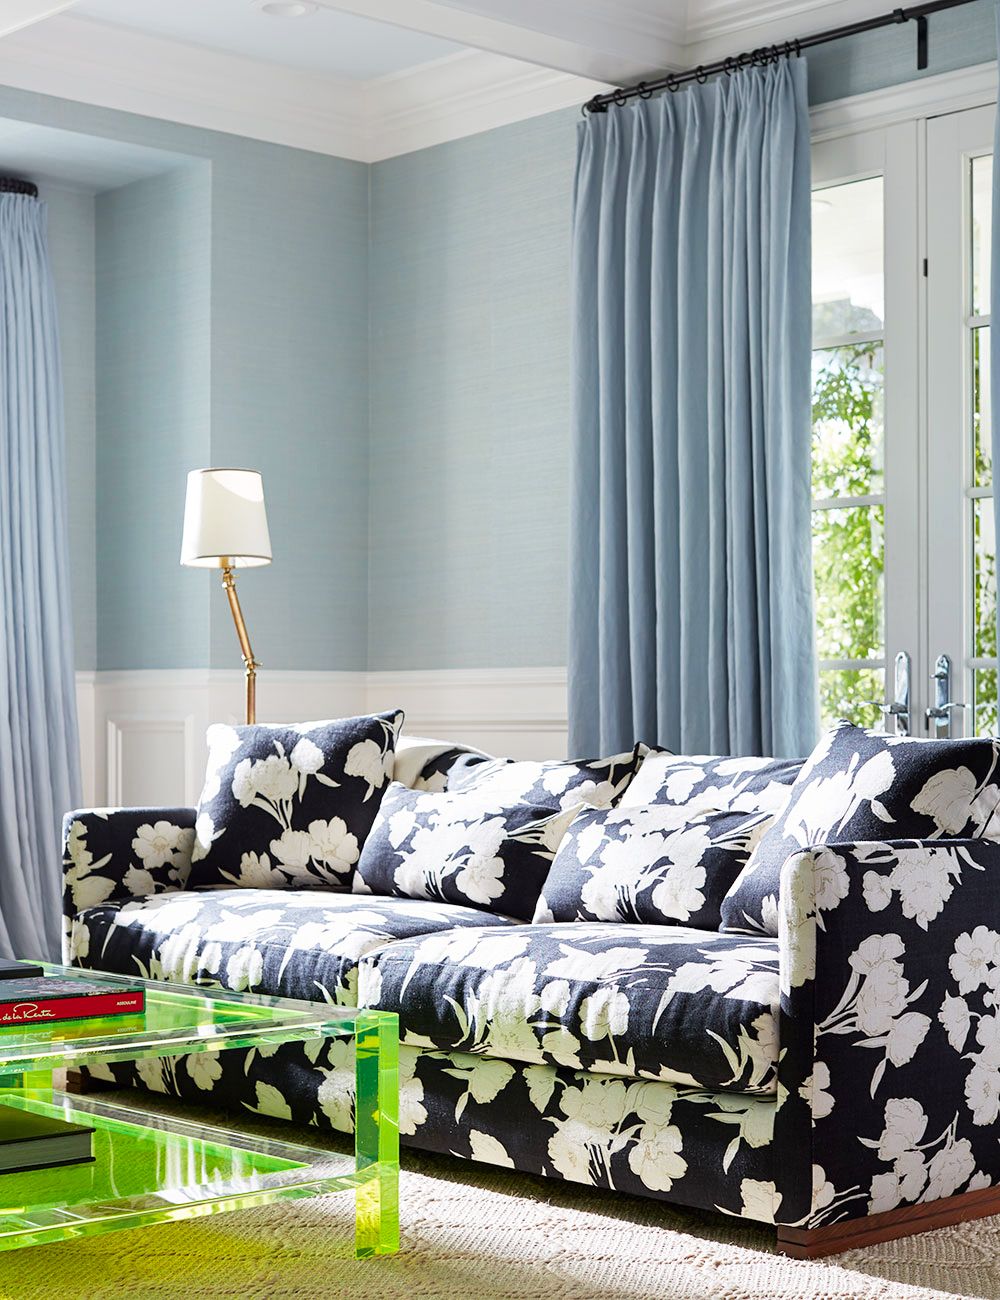 40 Best Living Room Color Ideas Top, Most Popular Living Room Colors